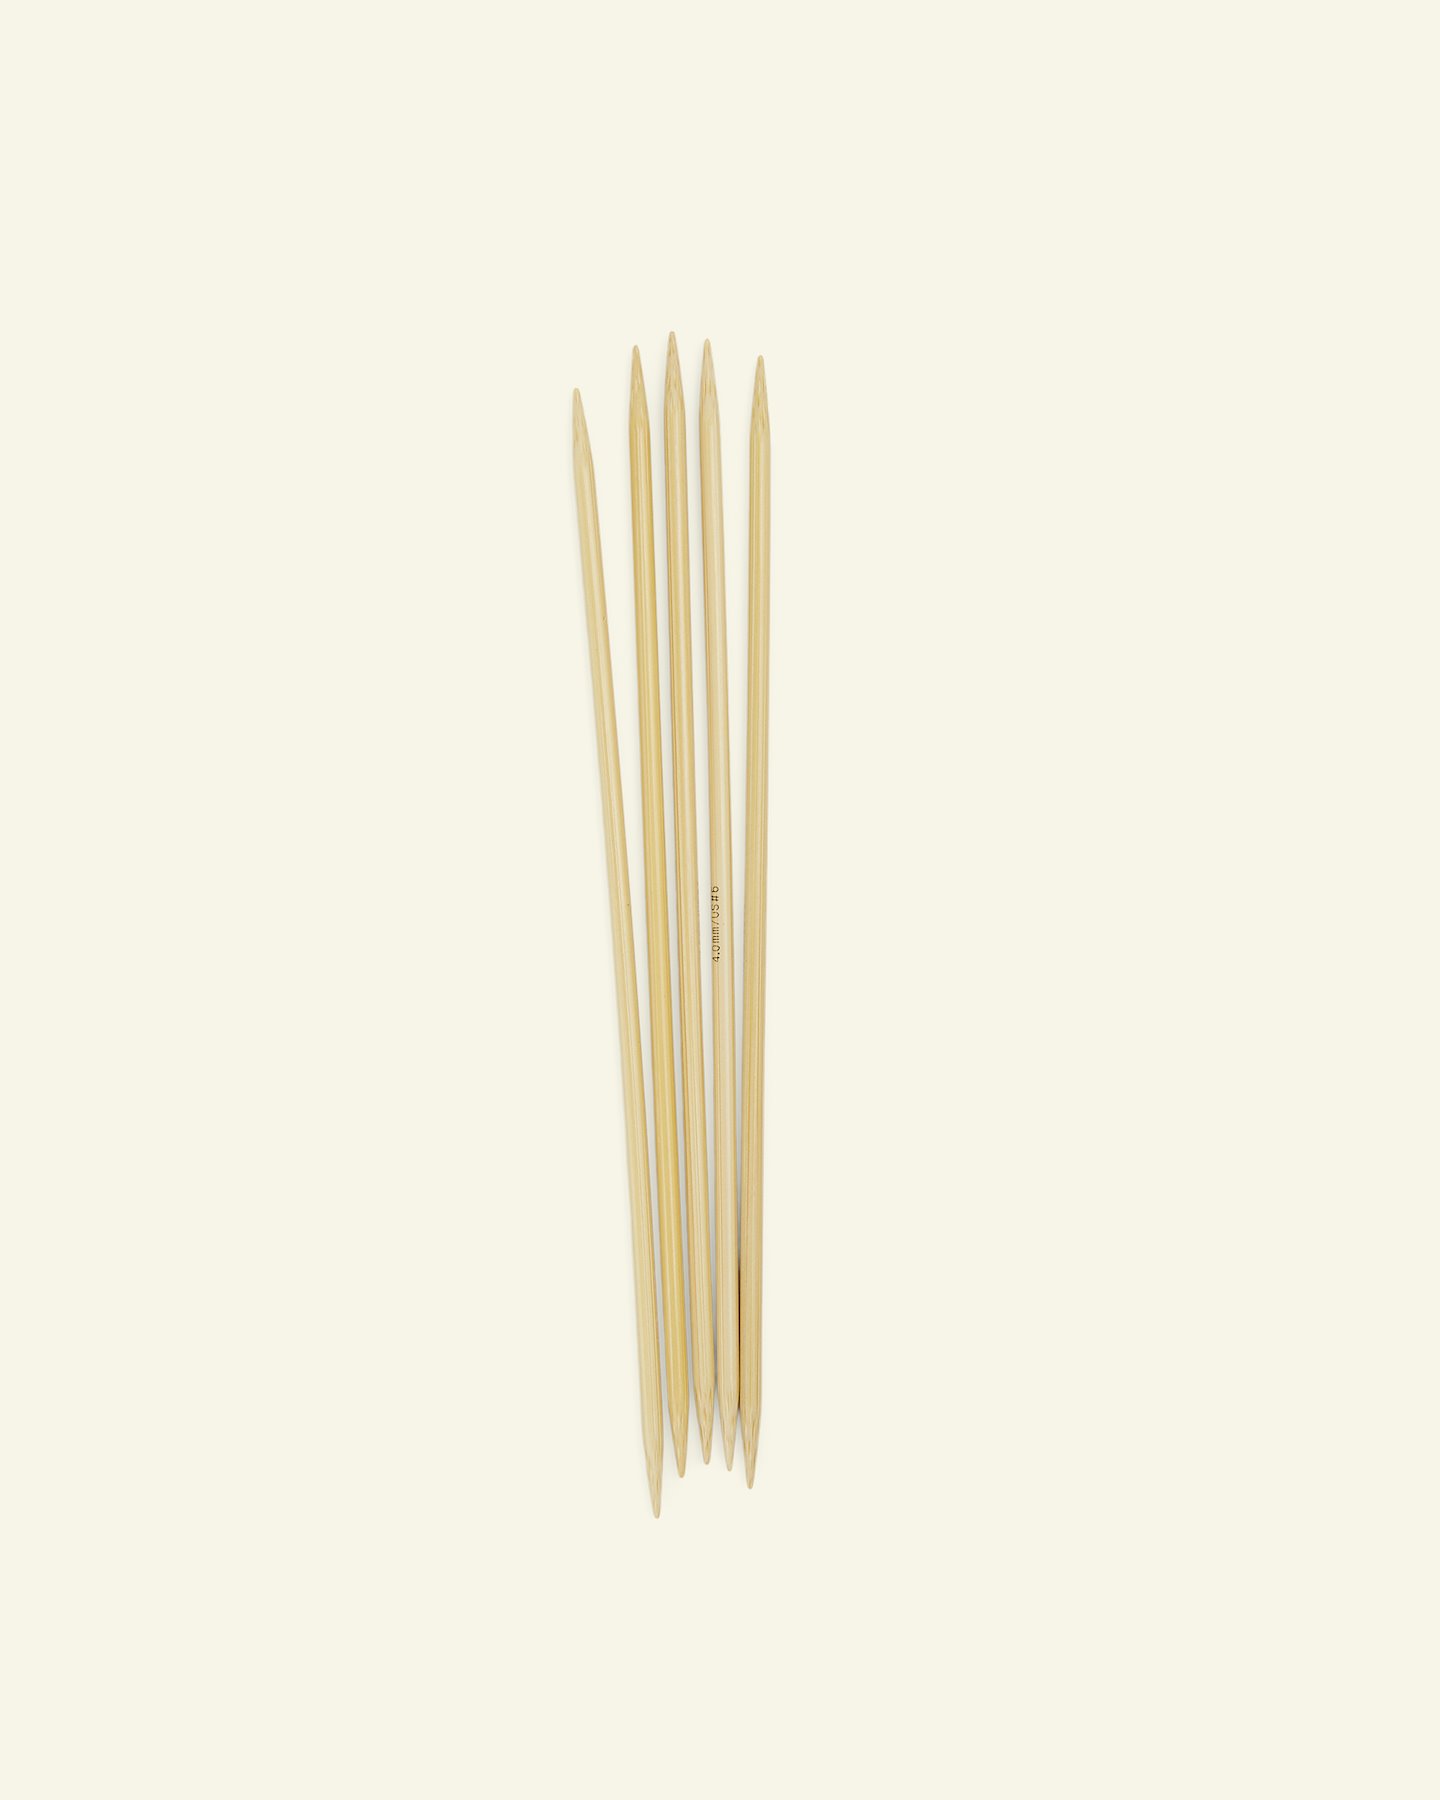 Addi strømpepinde bambus 20cm 4,0mm 83276_pack